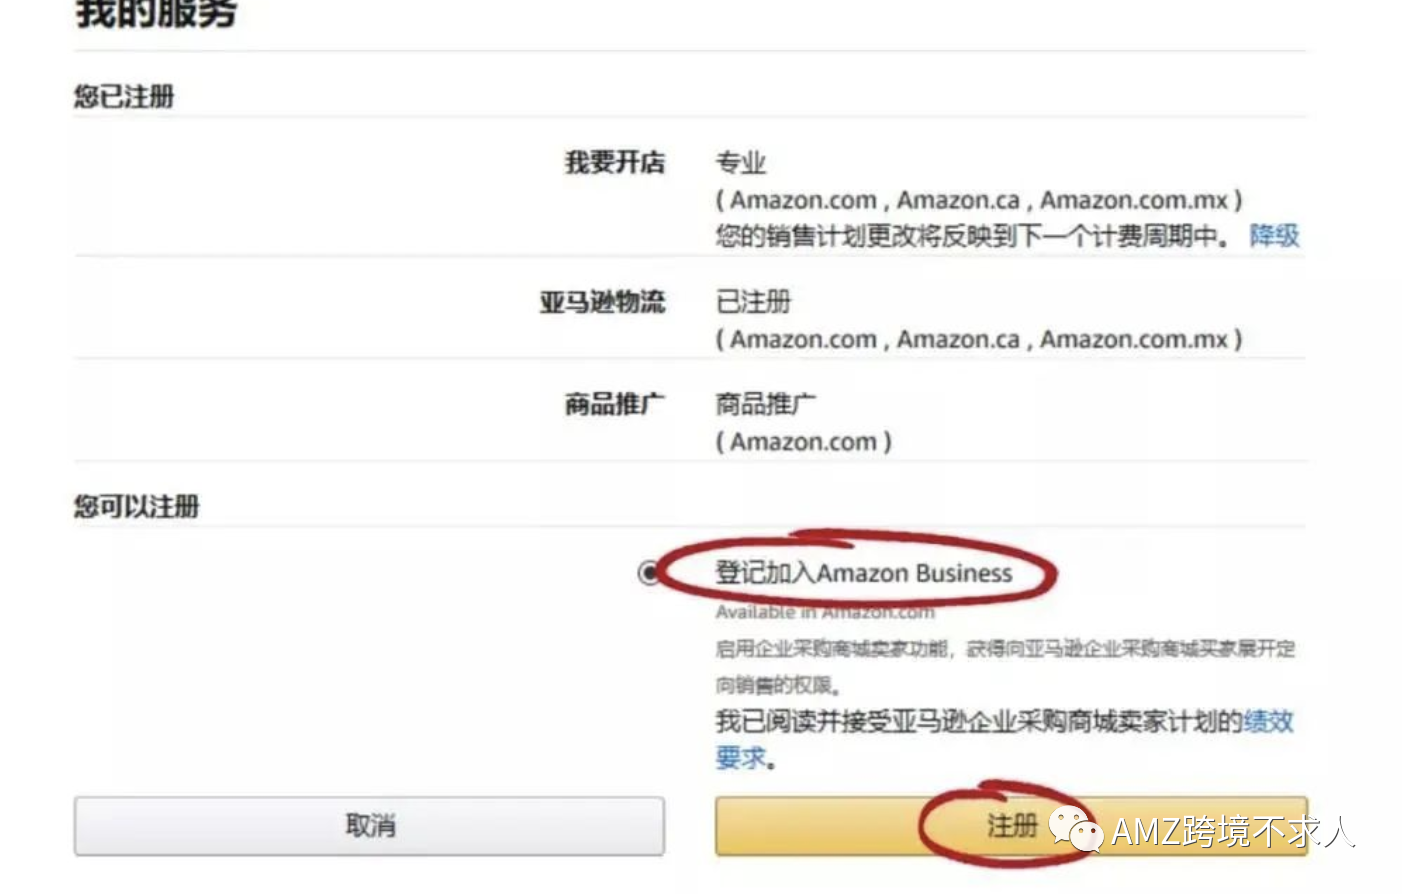 Amazon Business的收费情况，你了解清楚吗？